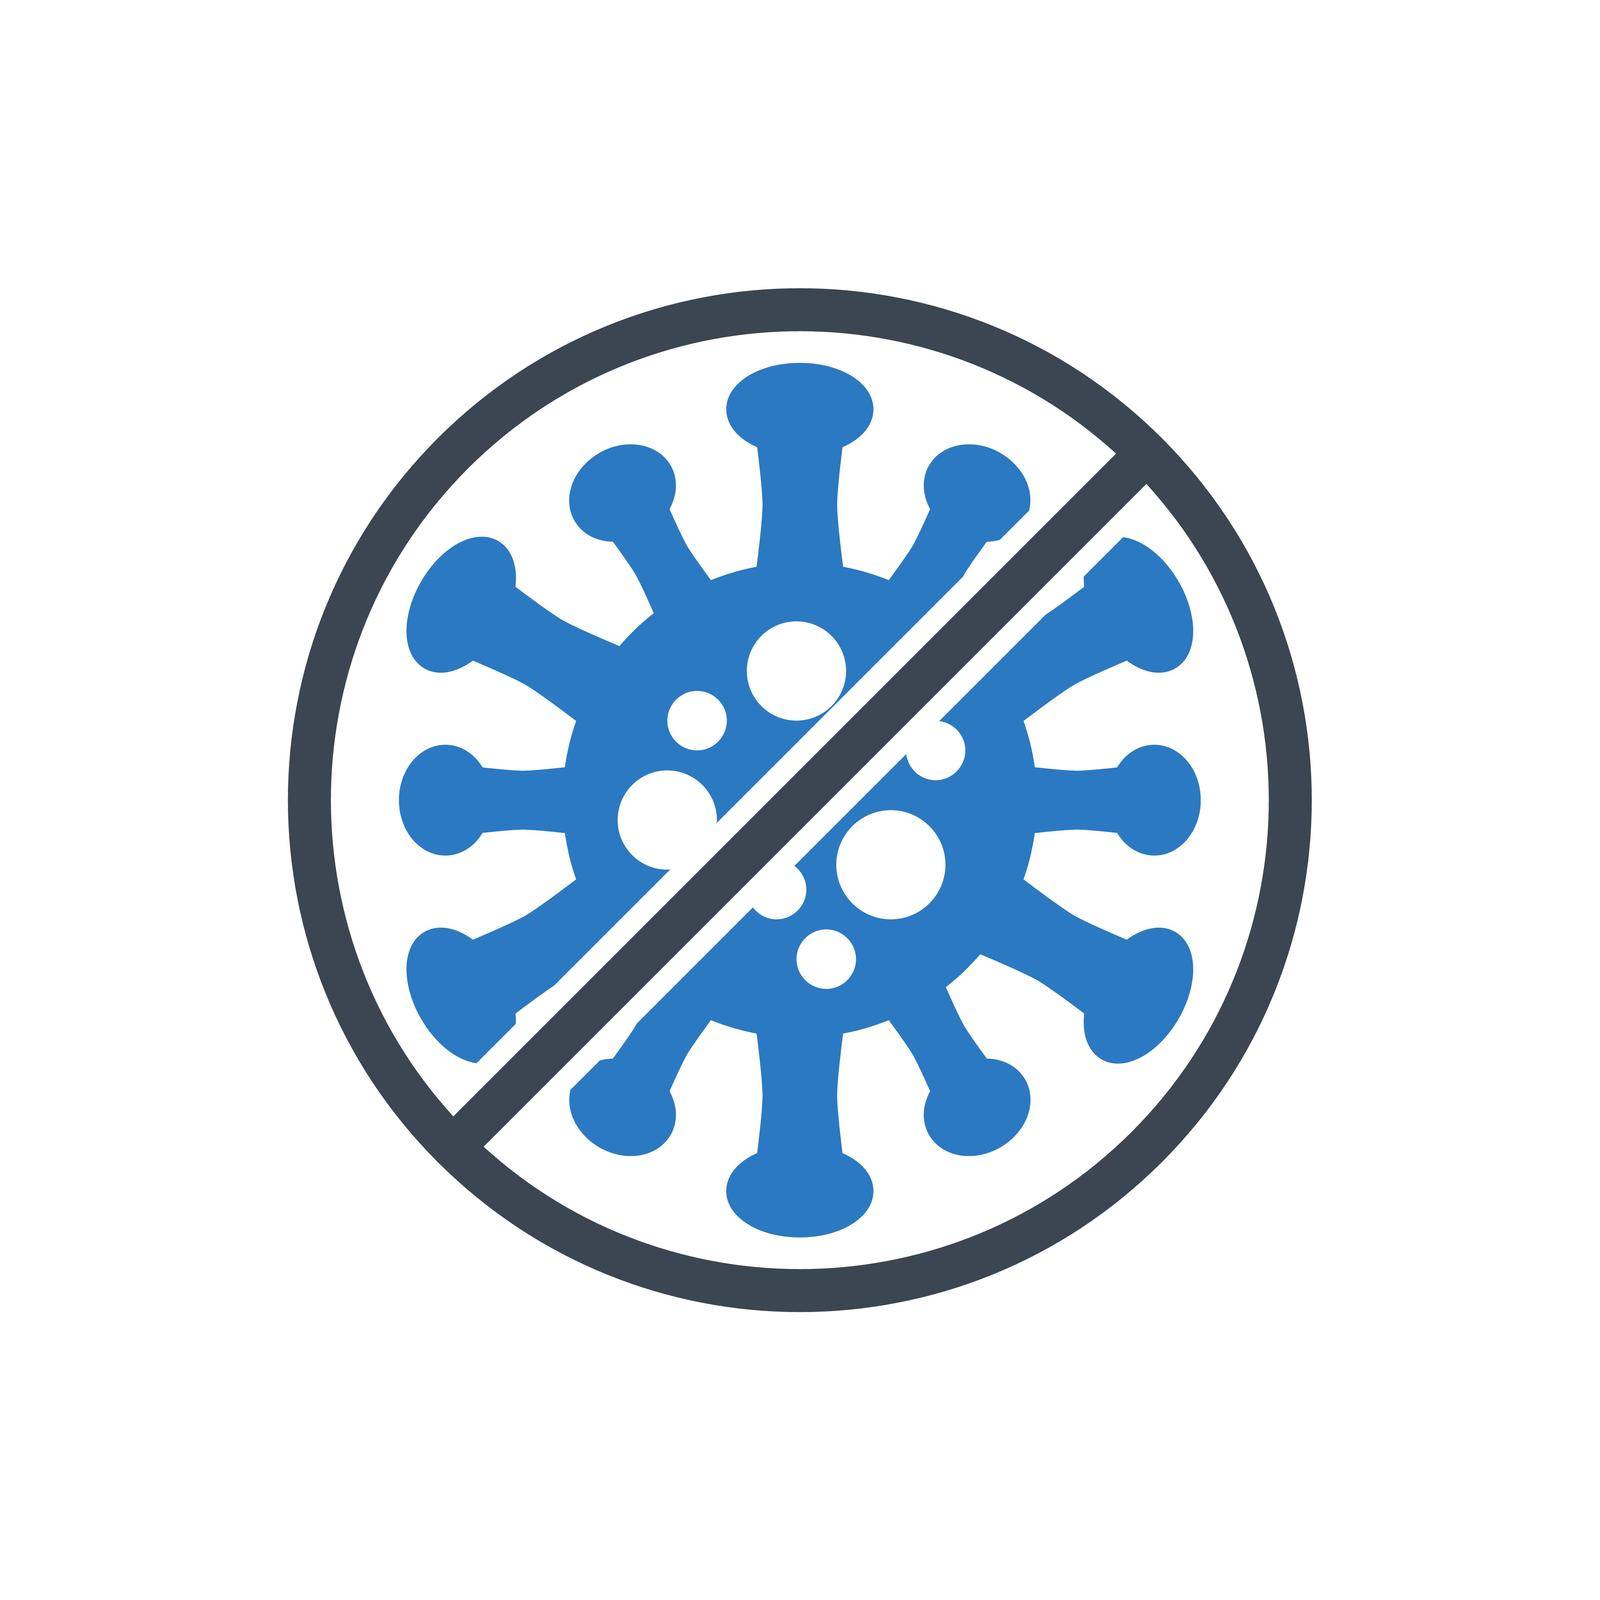 Anti Coronavirus related vector glyph icon. Virus COVID 19 in prohibition sign. Isolated on white background. Editable vector illustration